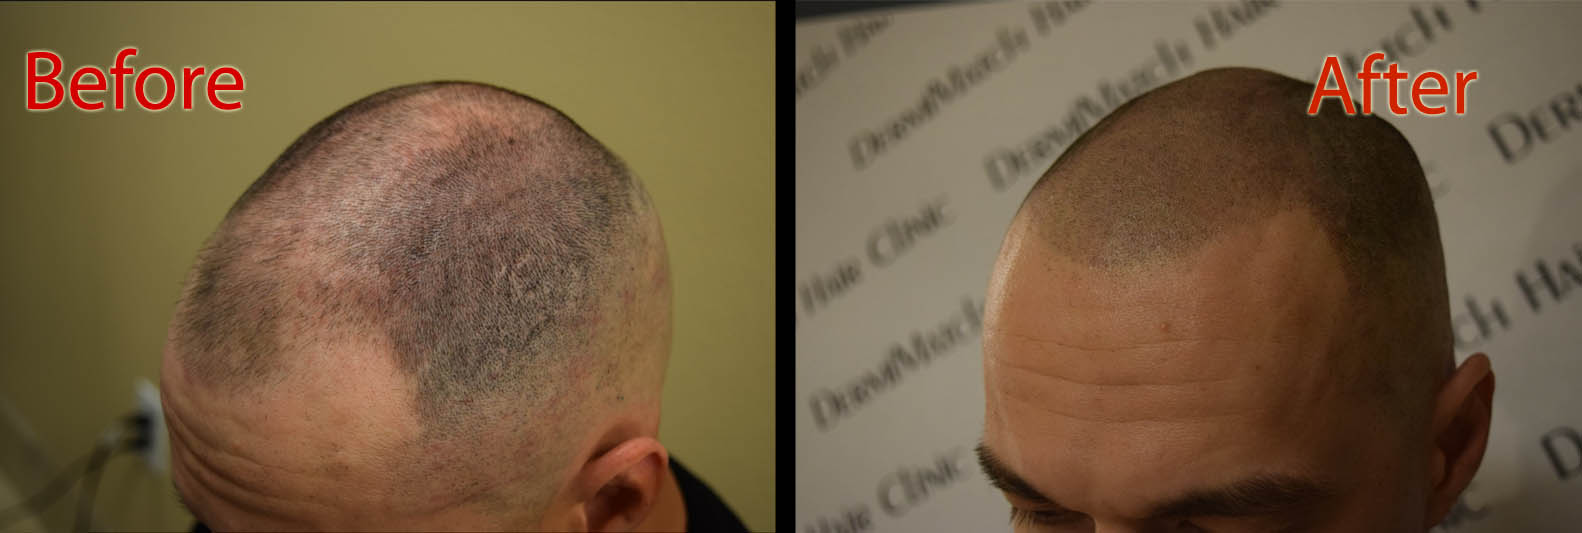 scalp micropigmentation smp for rheumatoid arthritis hair loss